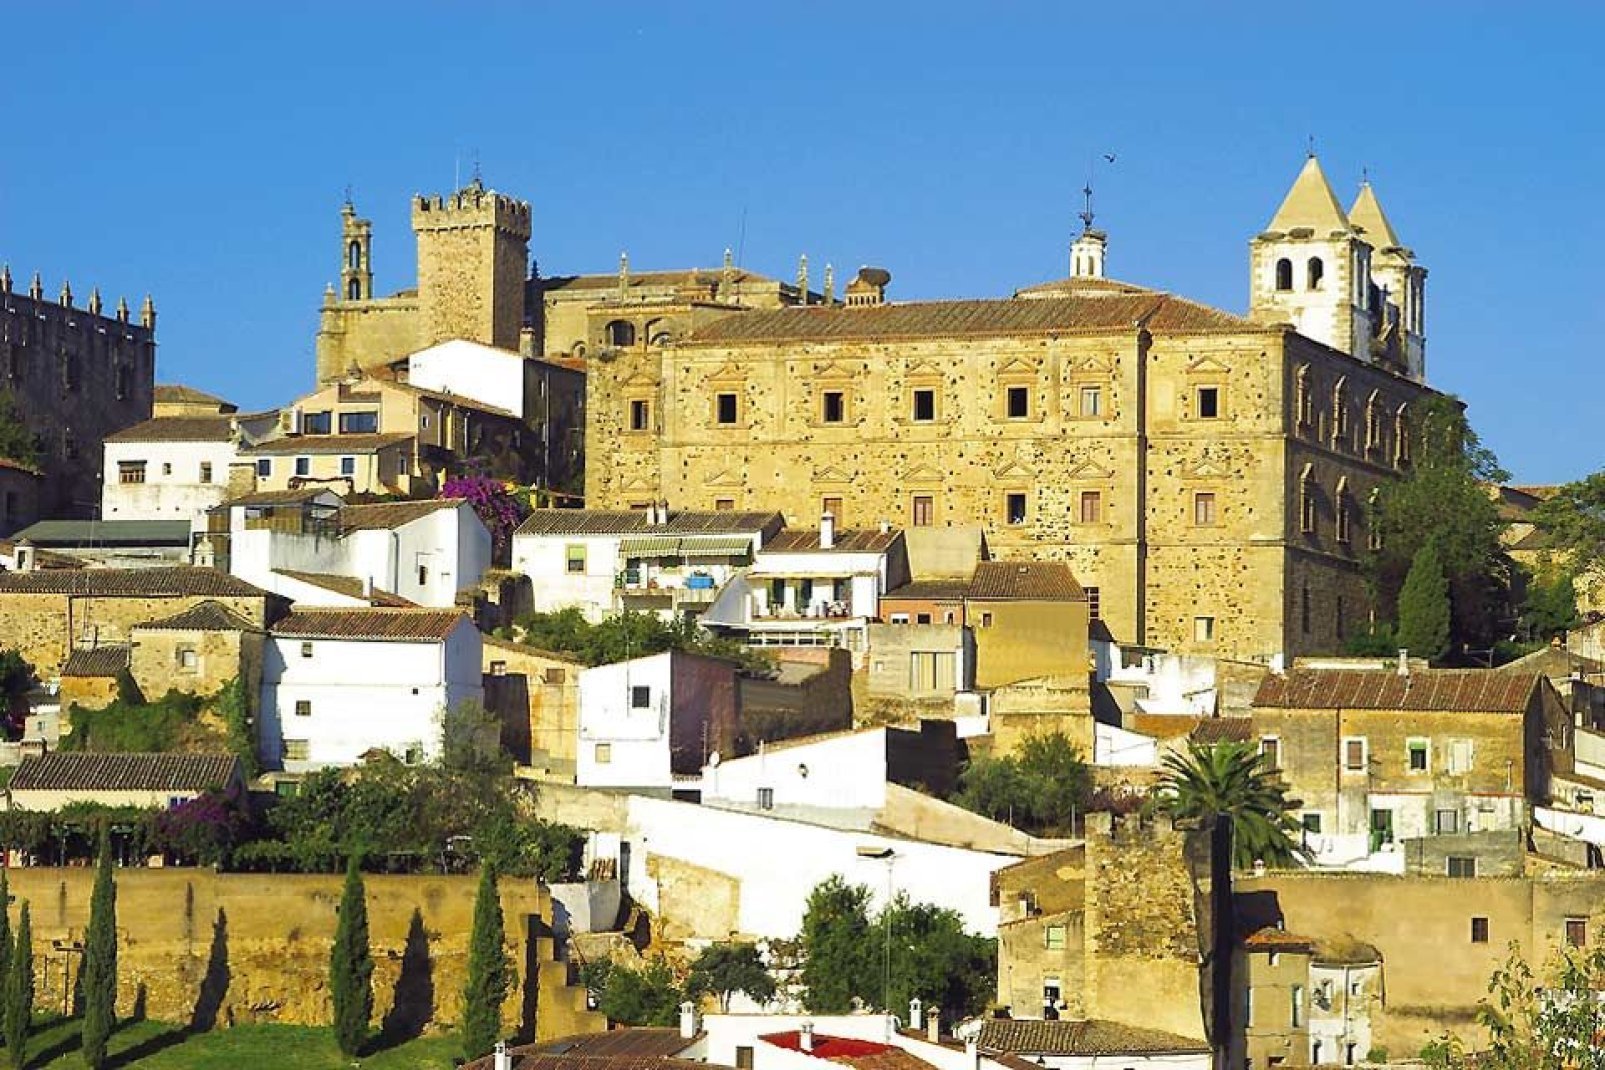 El centro de Cáceres está rodeado de murallas de origen árabe.